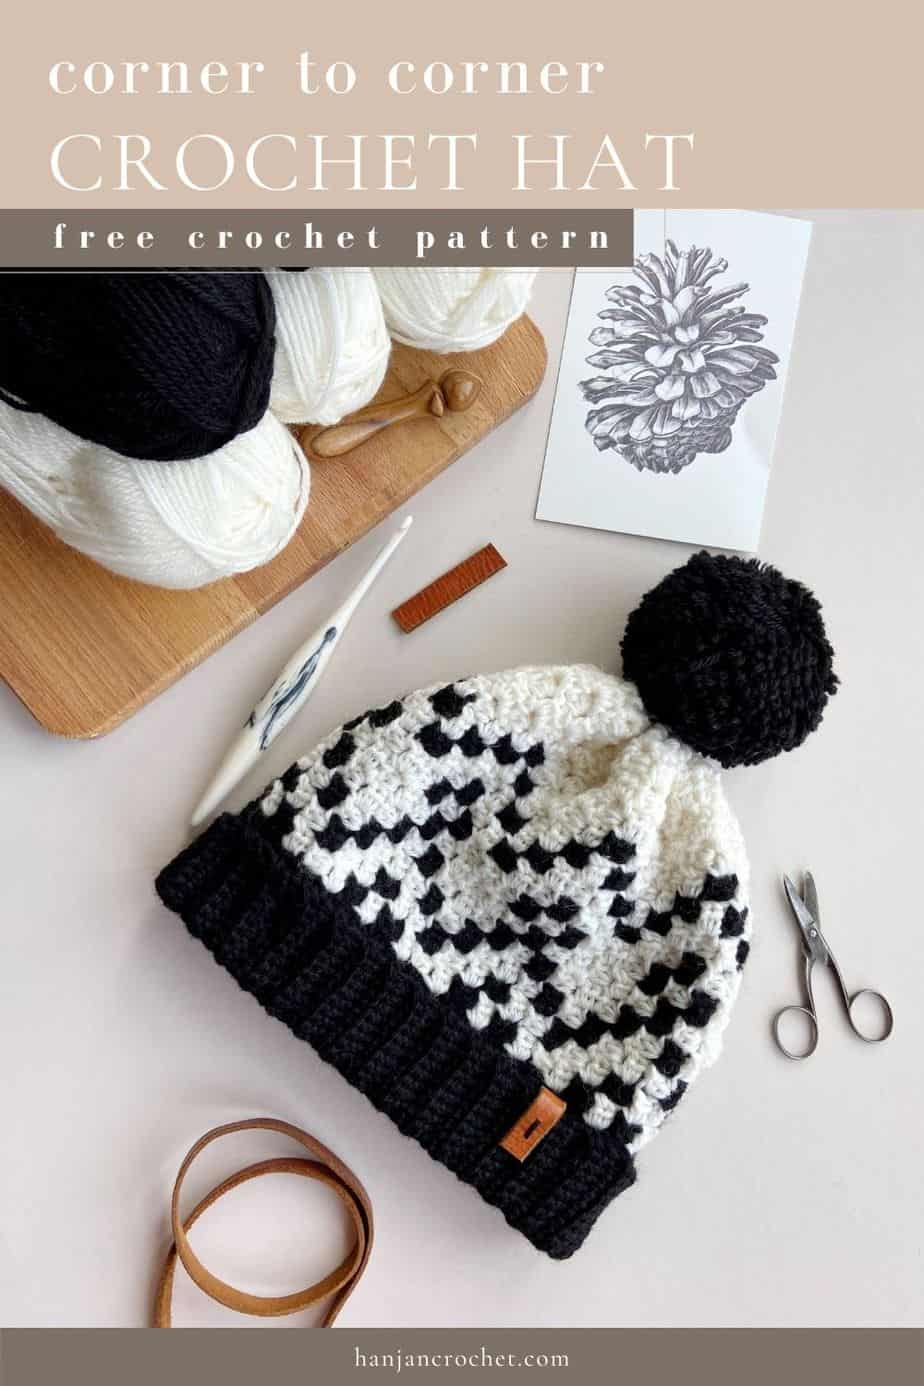 black and white crochet hat using corner to corner pattern with yarn, scissors, crochet hook surrounding it